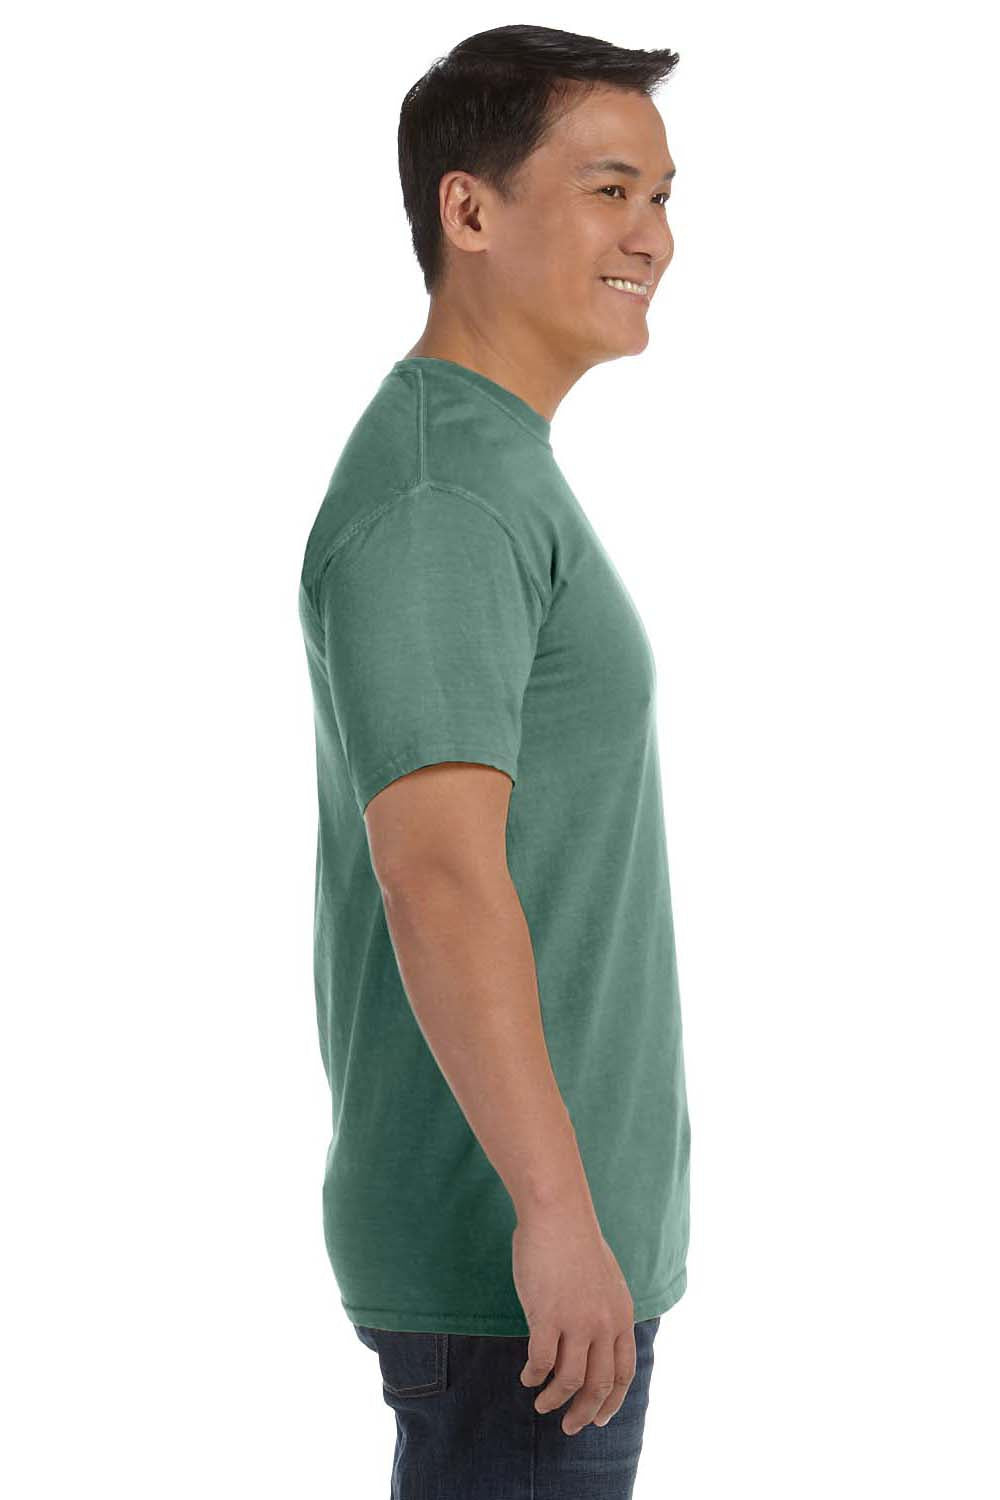 Comfort Colors C1717 Mens Short Sleeve Crewneck T-Shirt Light Green Side